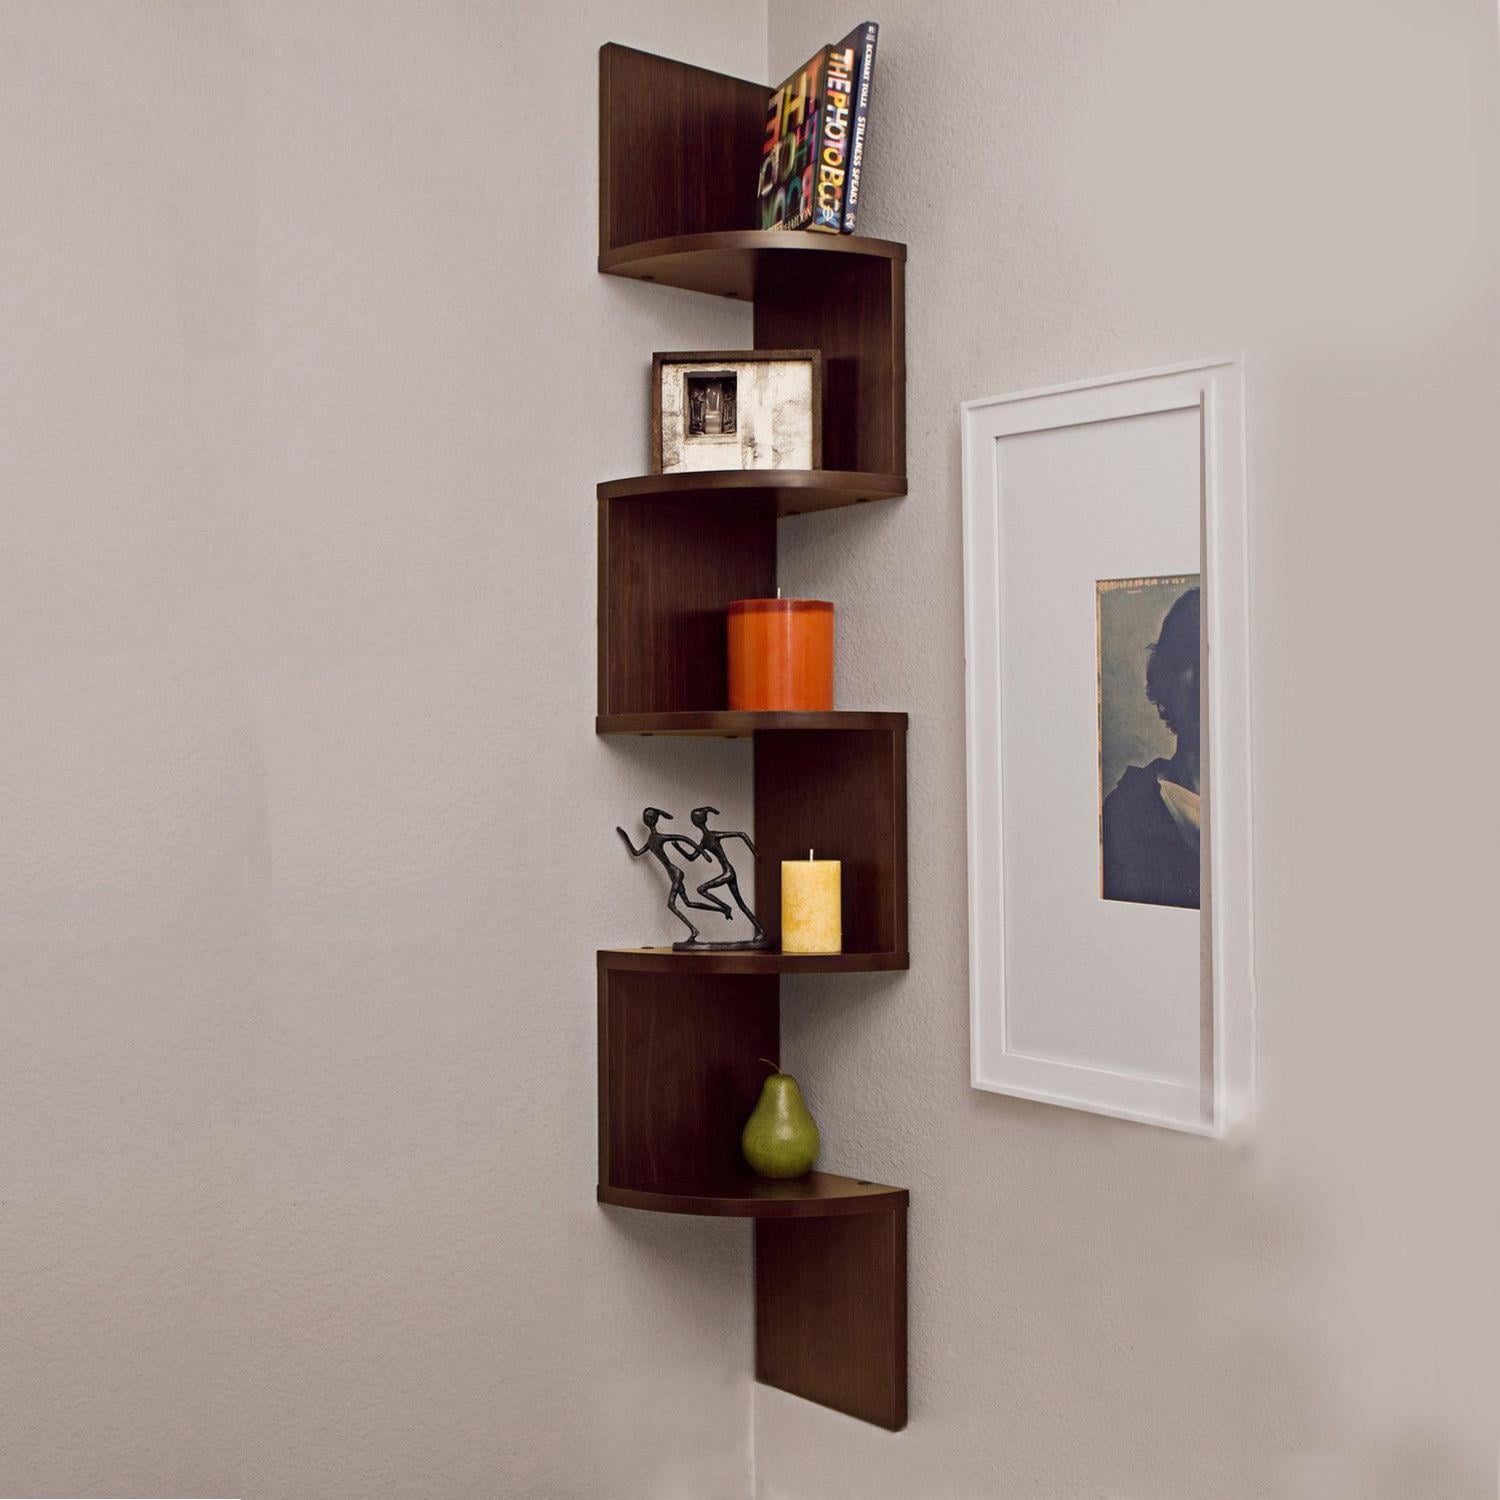 4 Shelf Floating Shelves Bookcase Wall Mount Shelf Display Home Storage Decor 